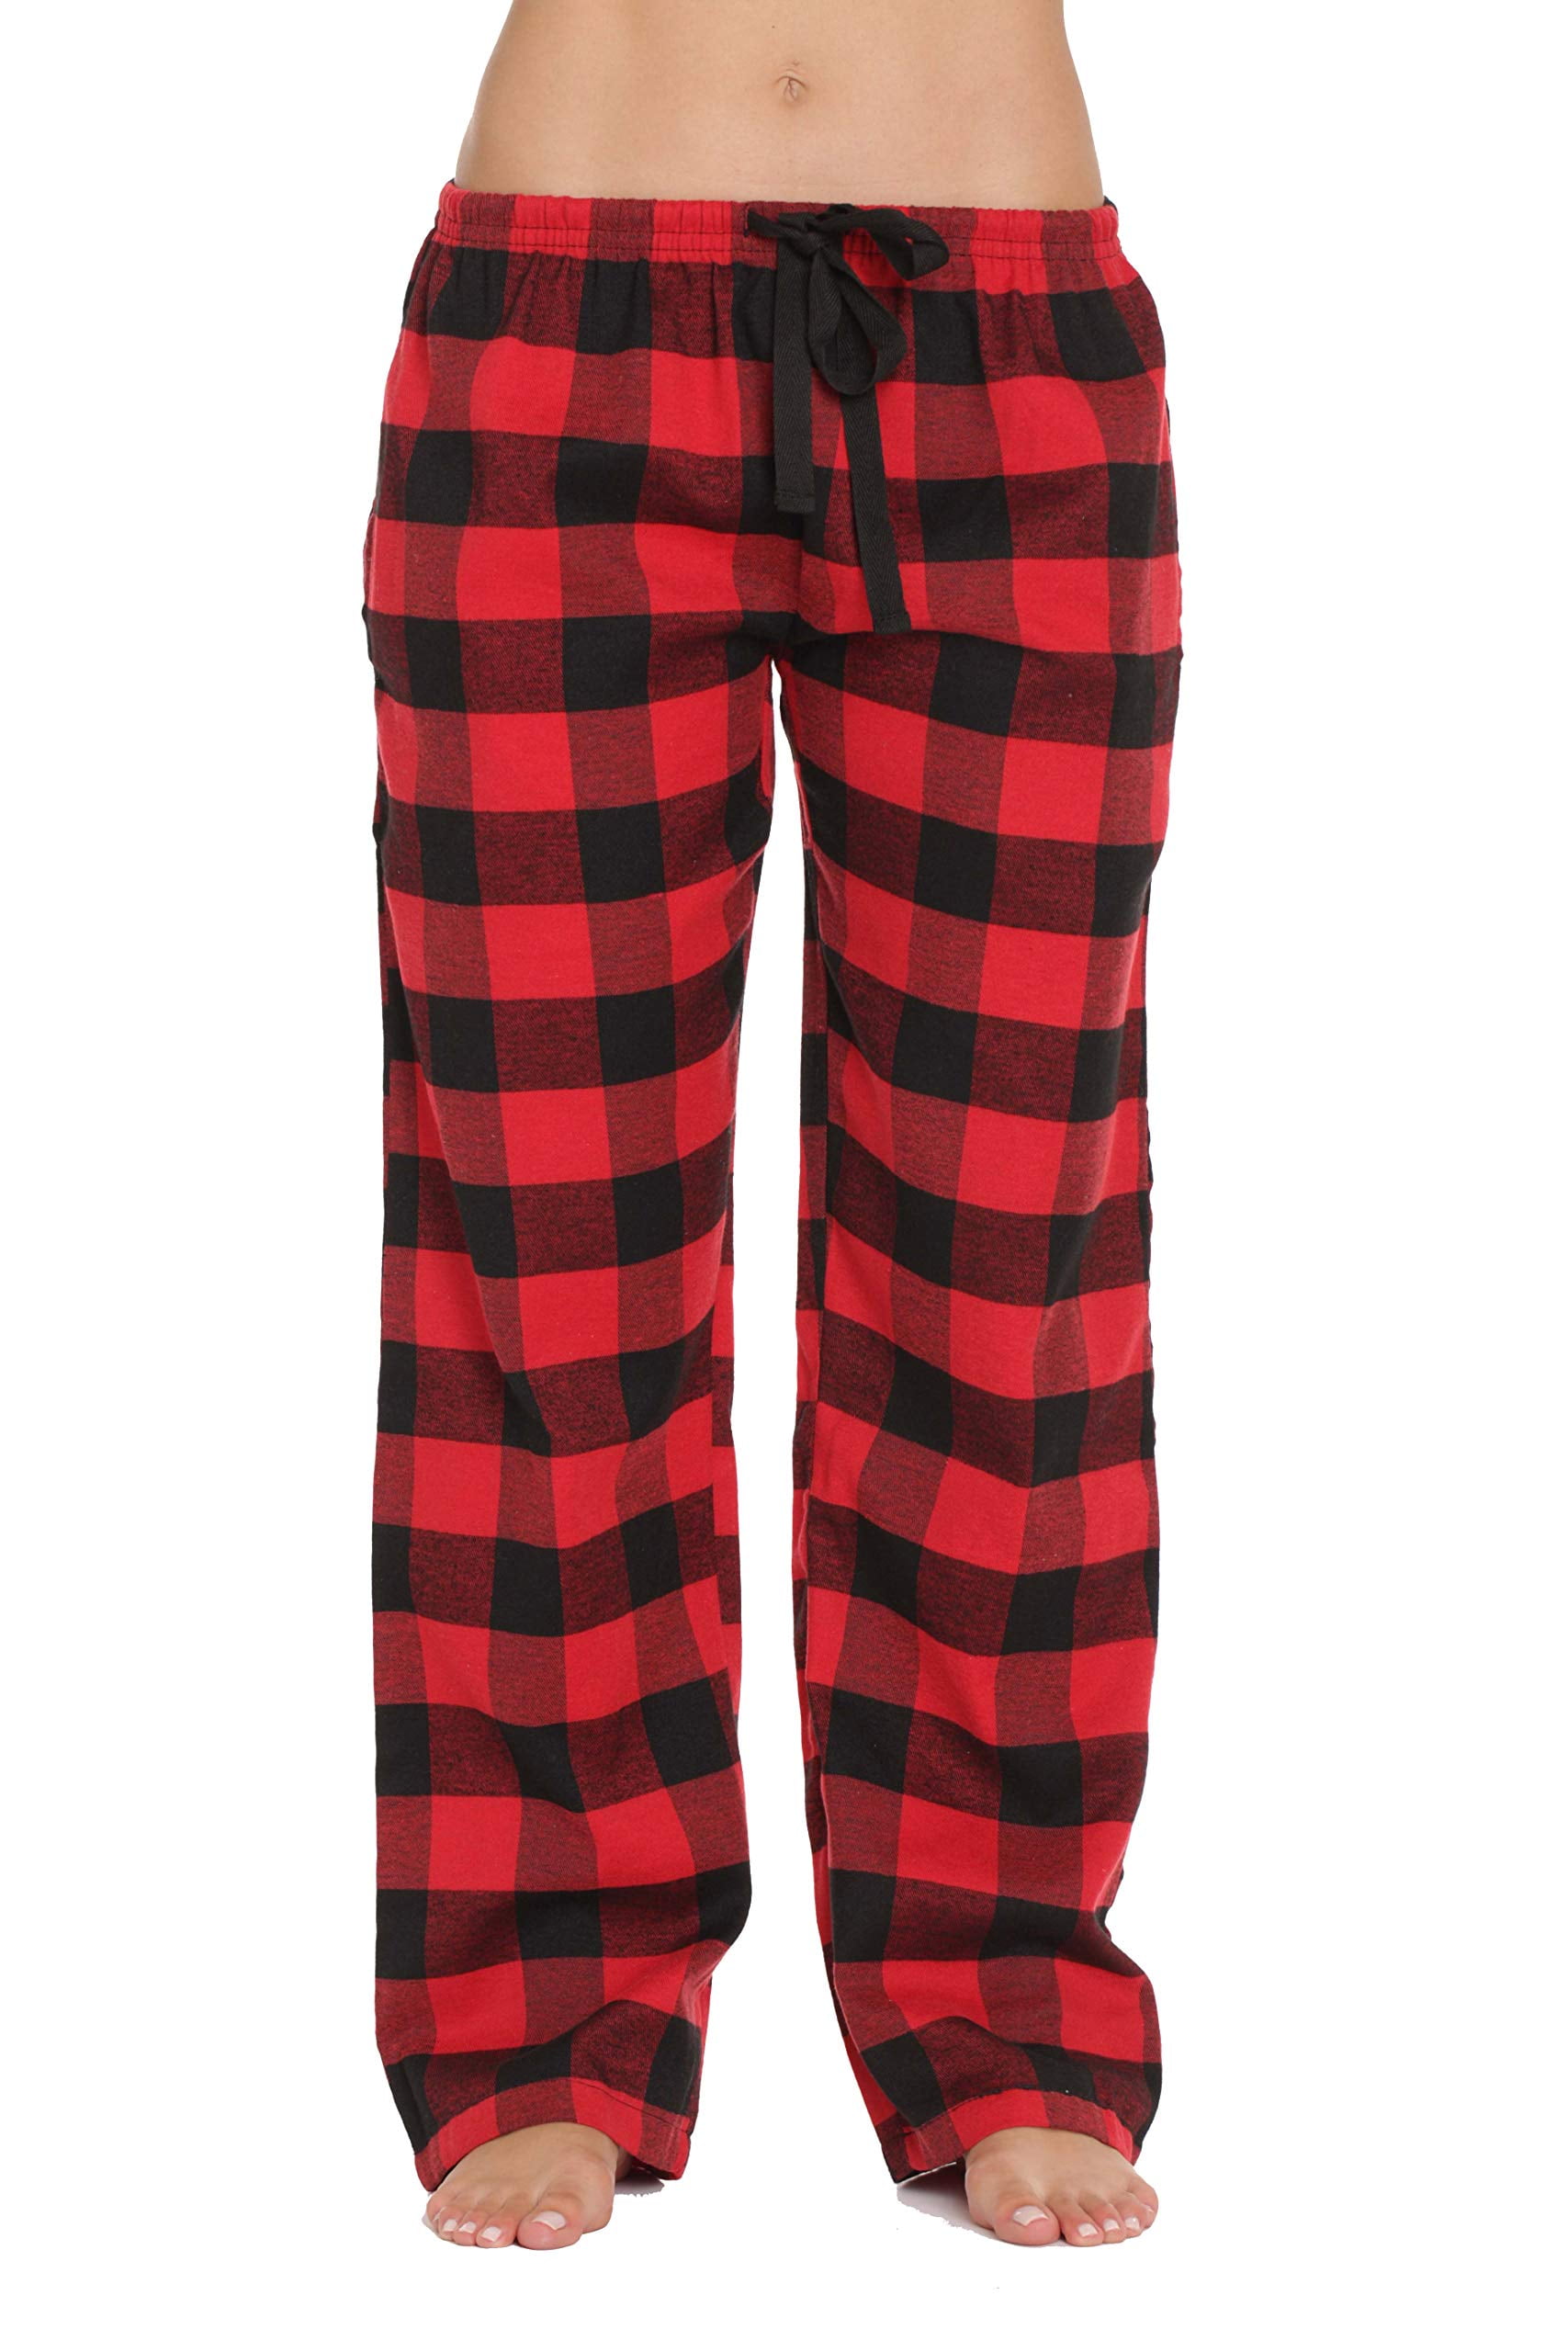 #followme Buffalo Plaid Flannel Pajama Pants for Women with Pockets ...